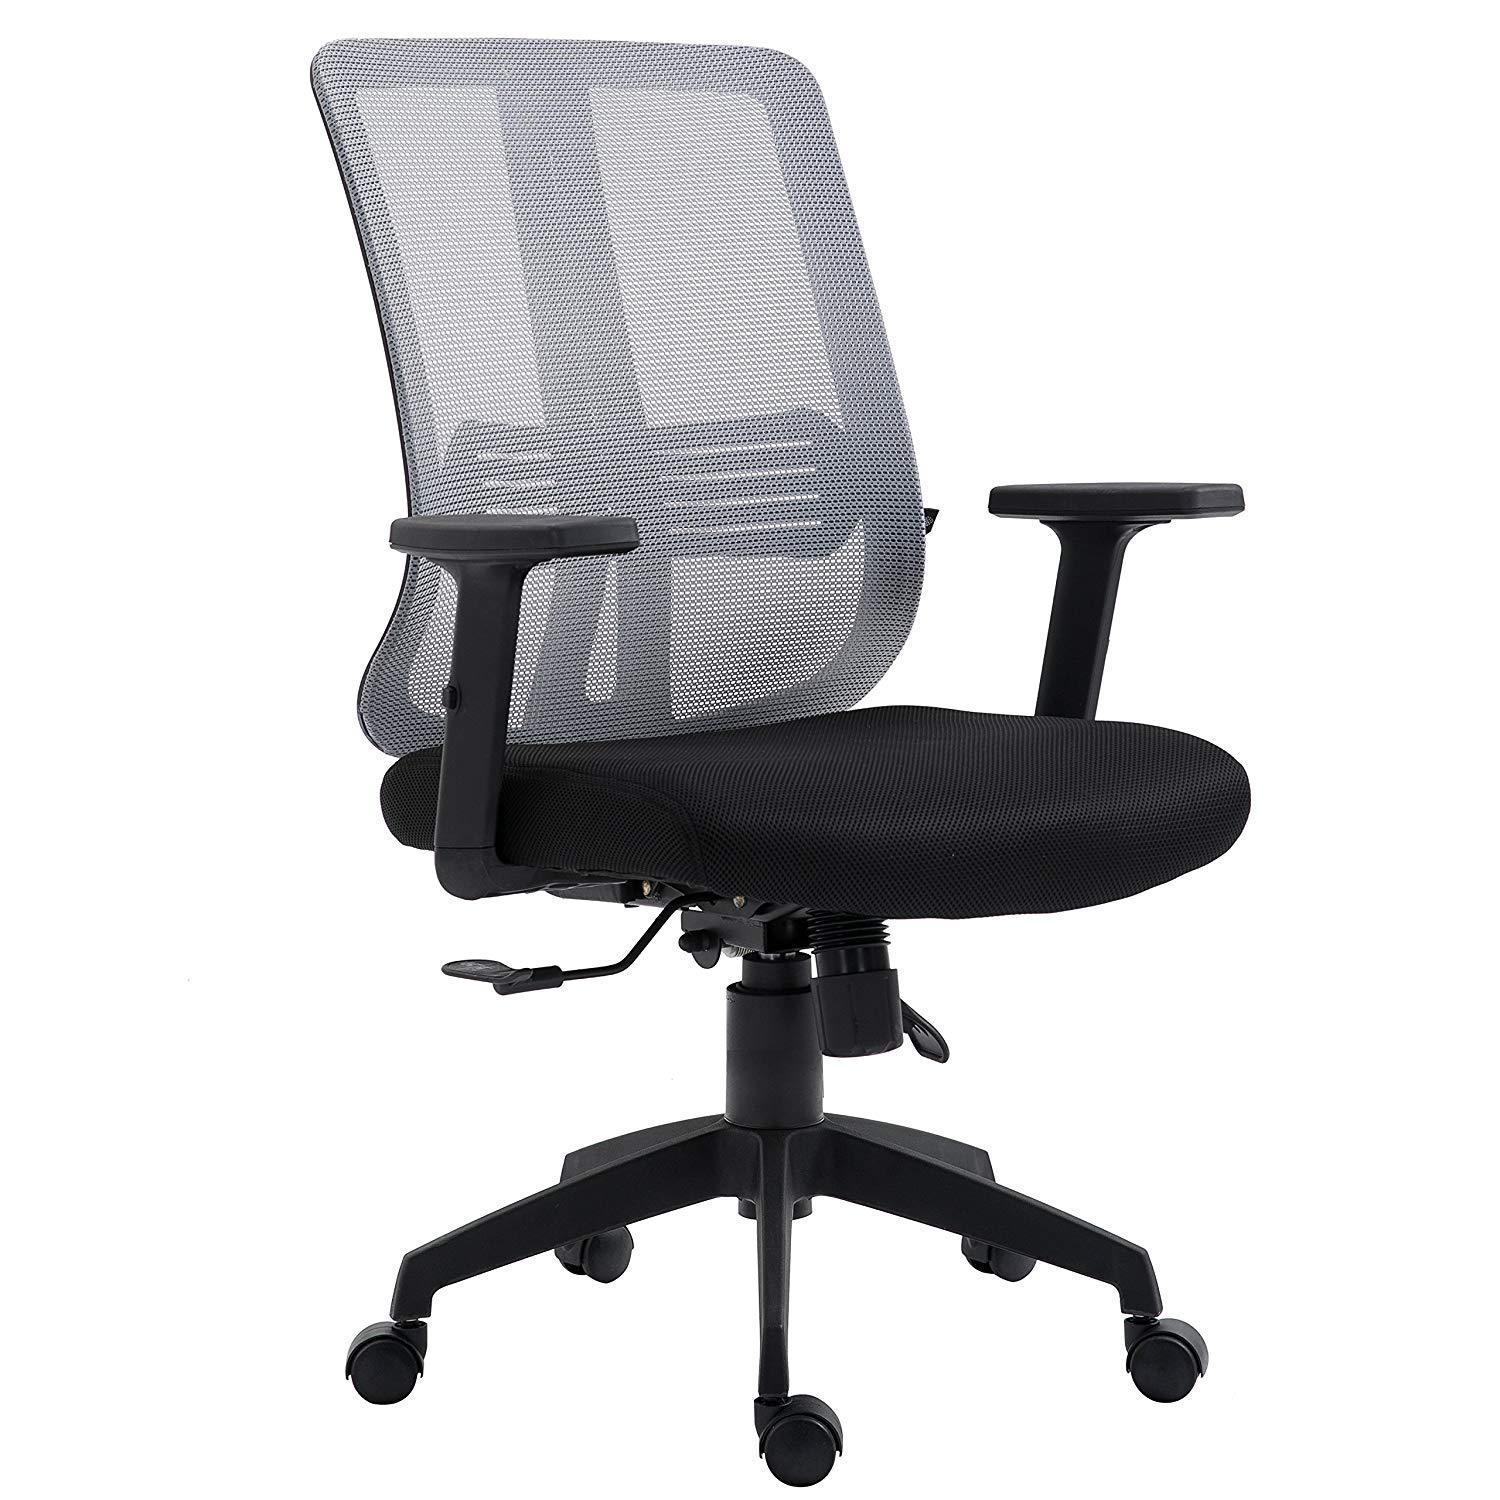 Grey Mesh Medium Back Executive Office Chair Swivel Desk Chair with Synchro-Tilt, Adjustable Armrests